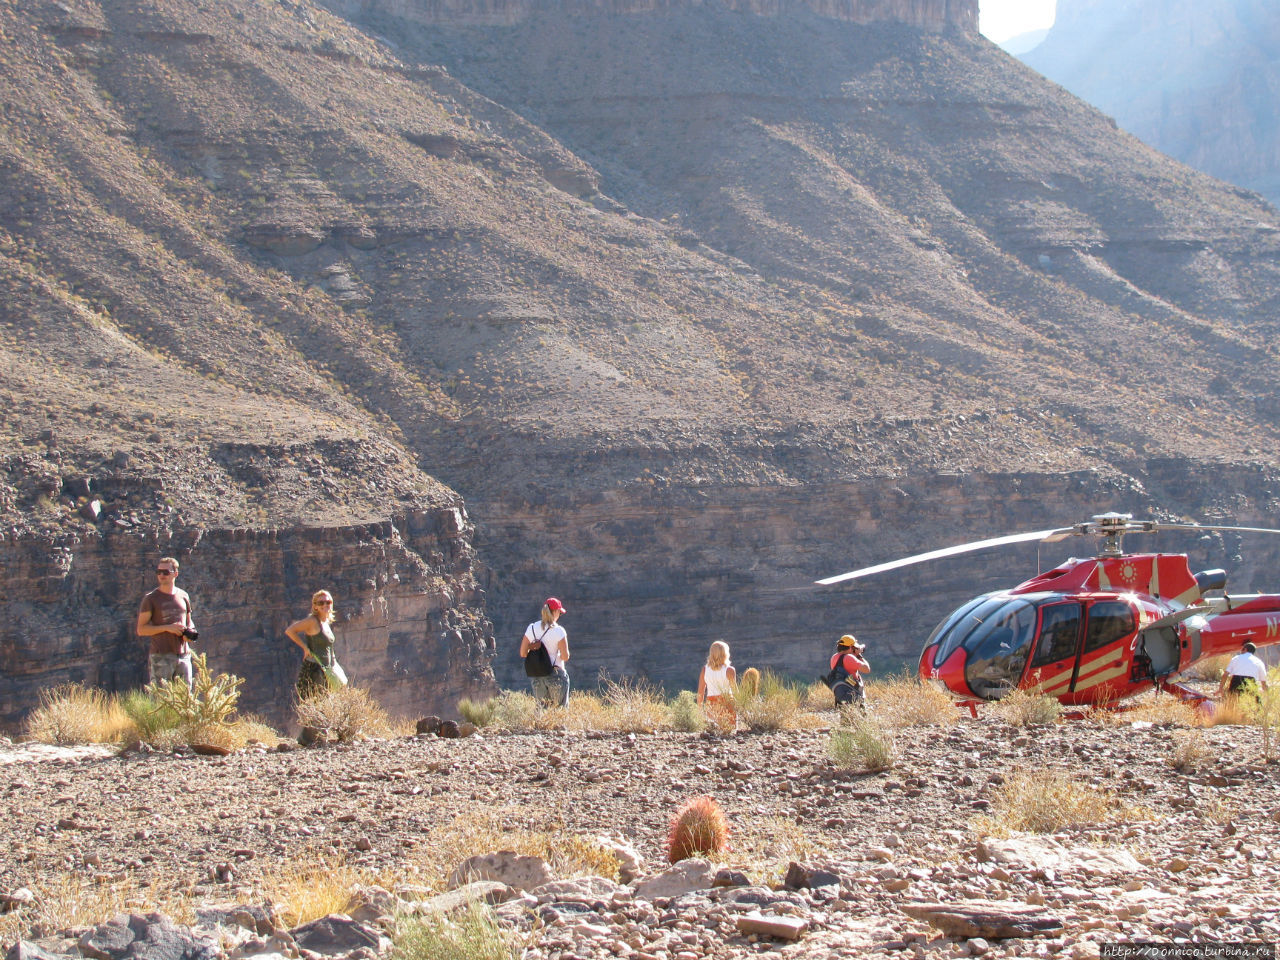 Аэропорт (экскурсия на вертолете в Гранд Каньон) / Airport / Helicopter tour to Grand Canyon